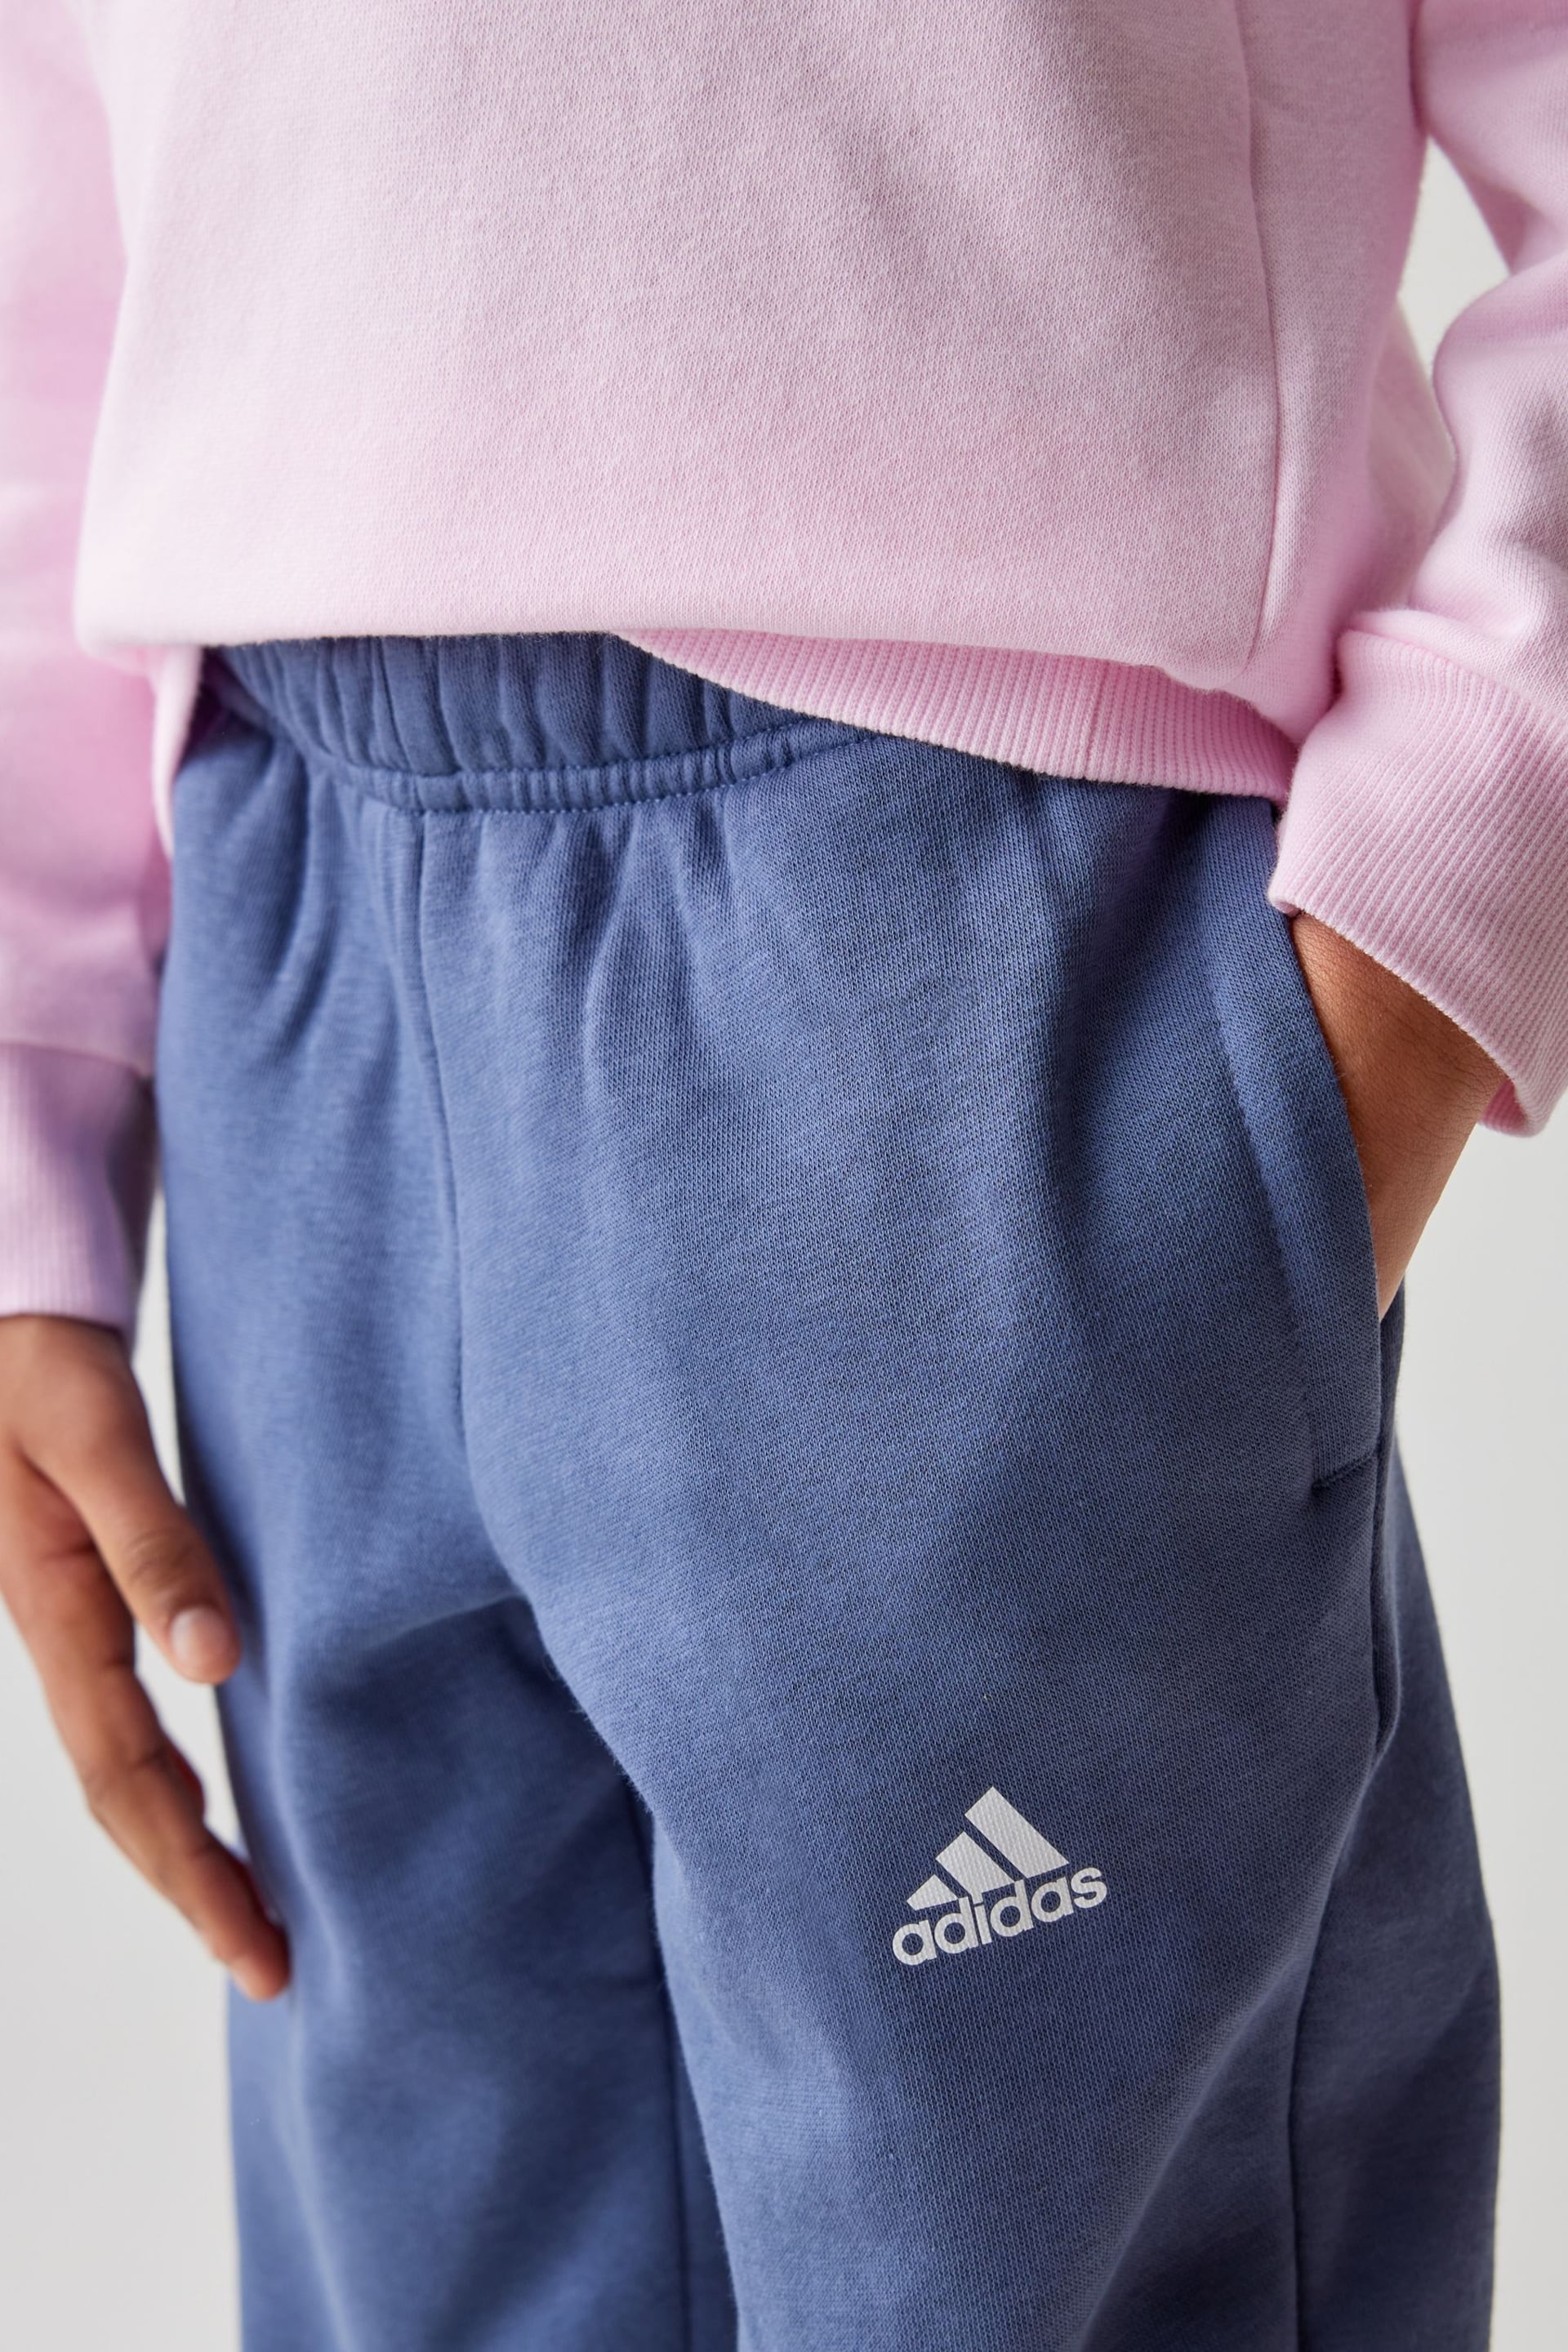 adidas Pink/Blue Sportswear Essentials Logo Fleece Jogger Set - Image 4 of 11